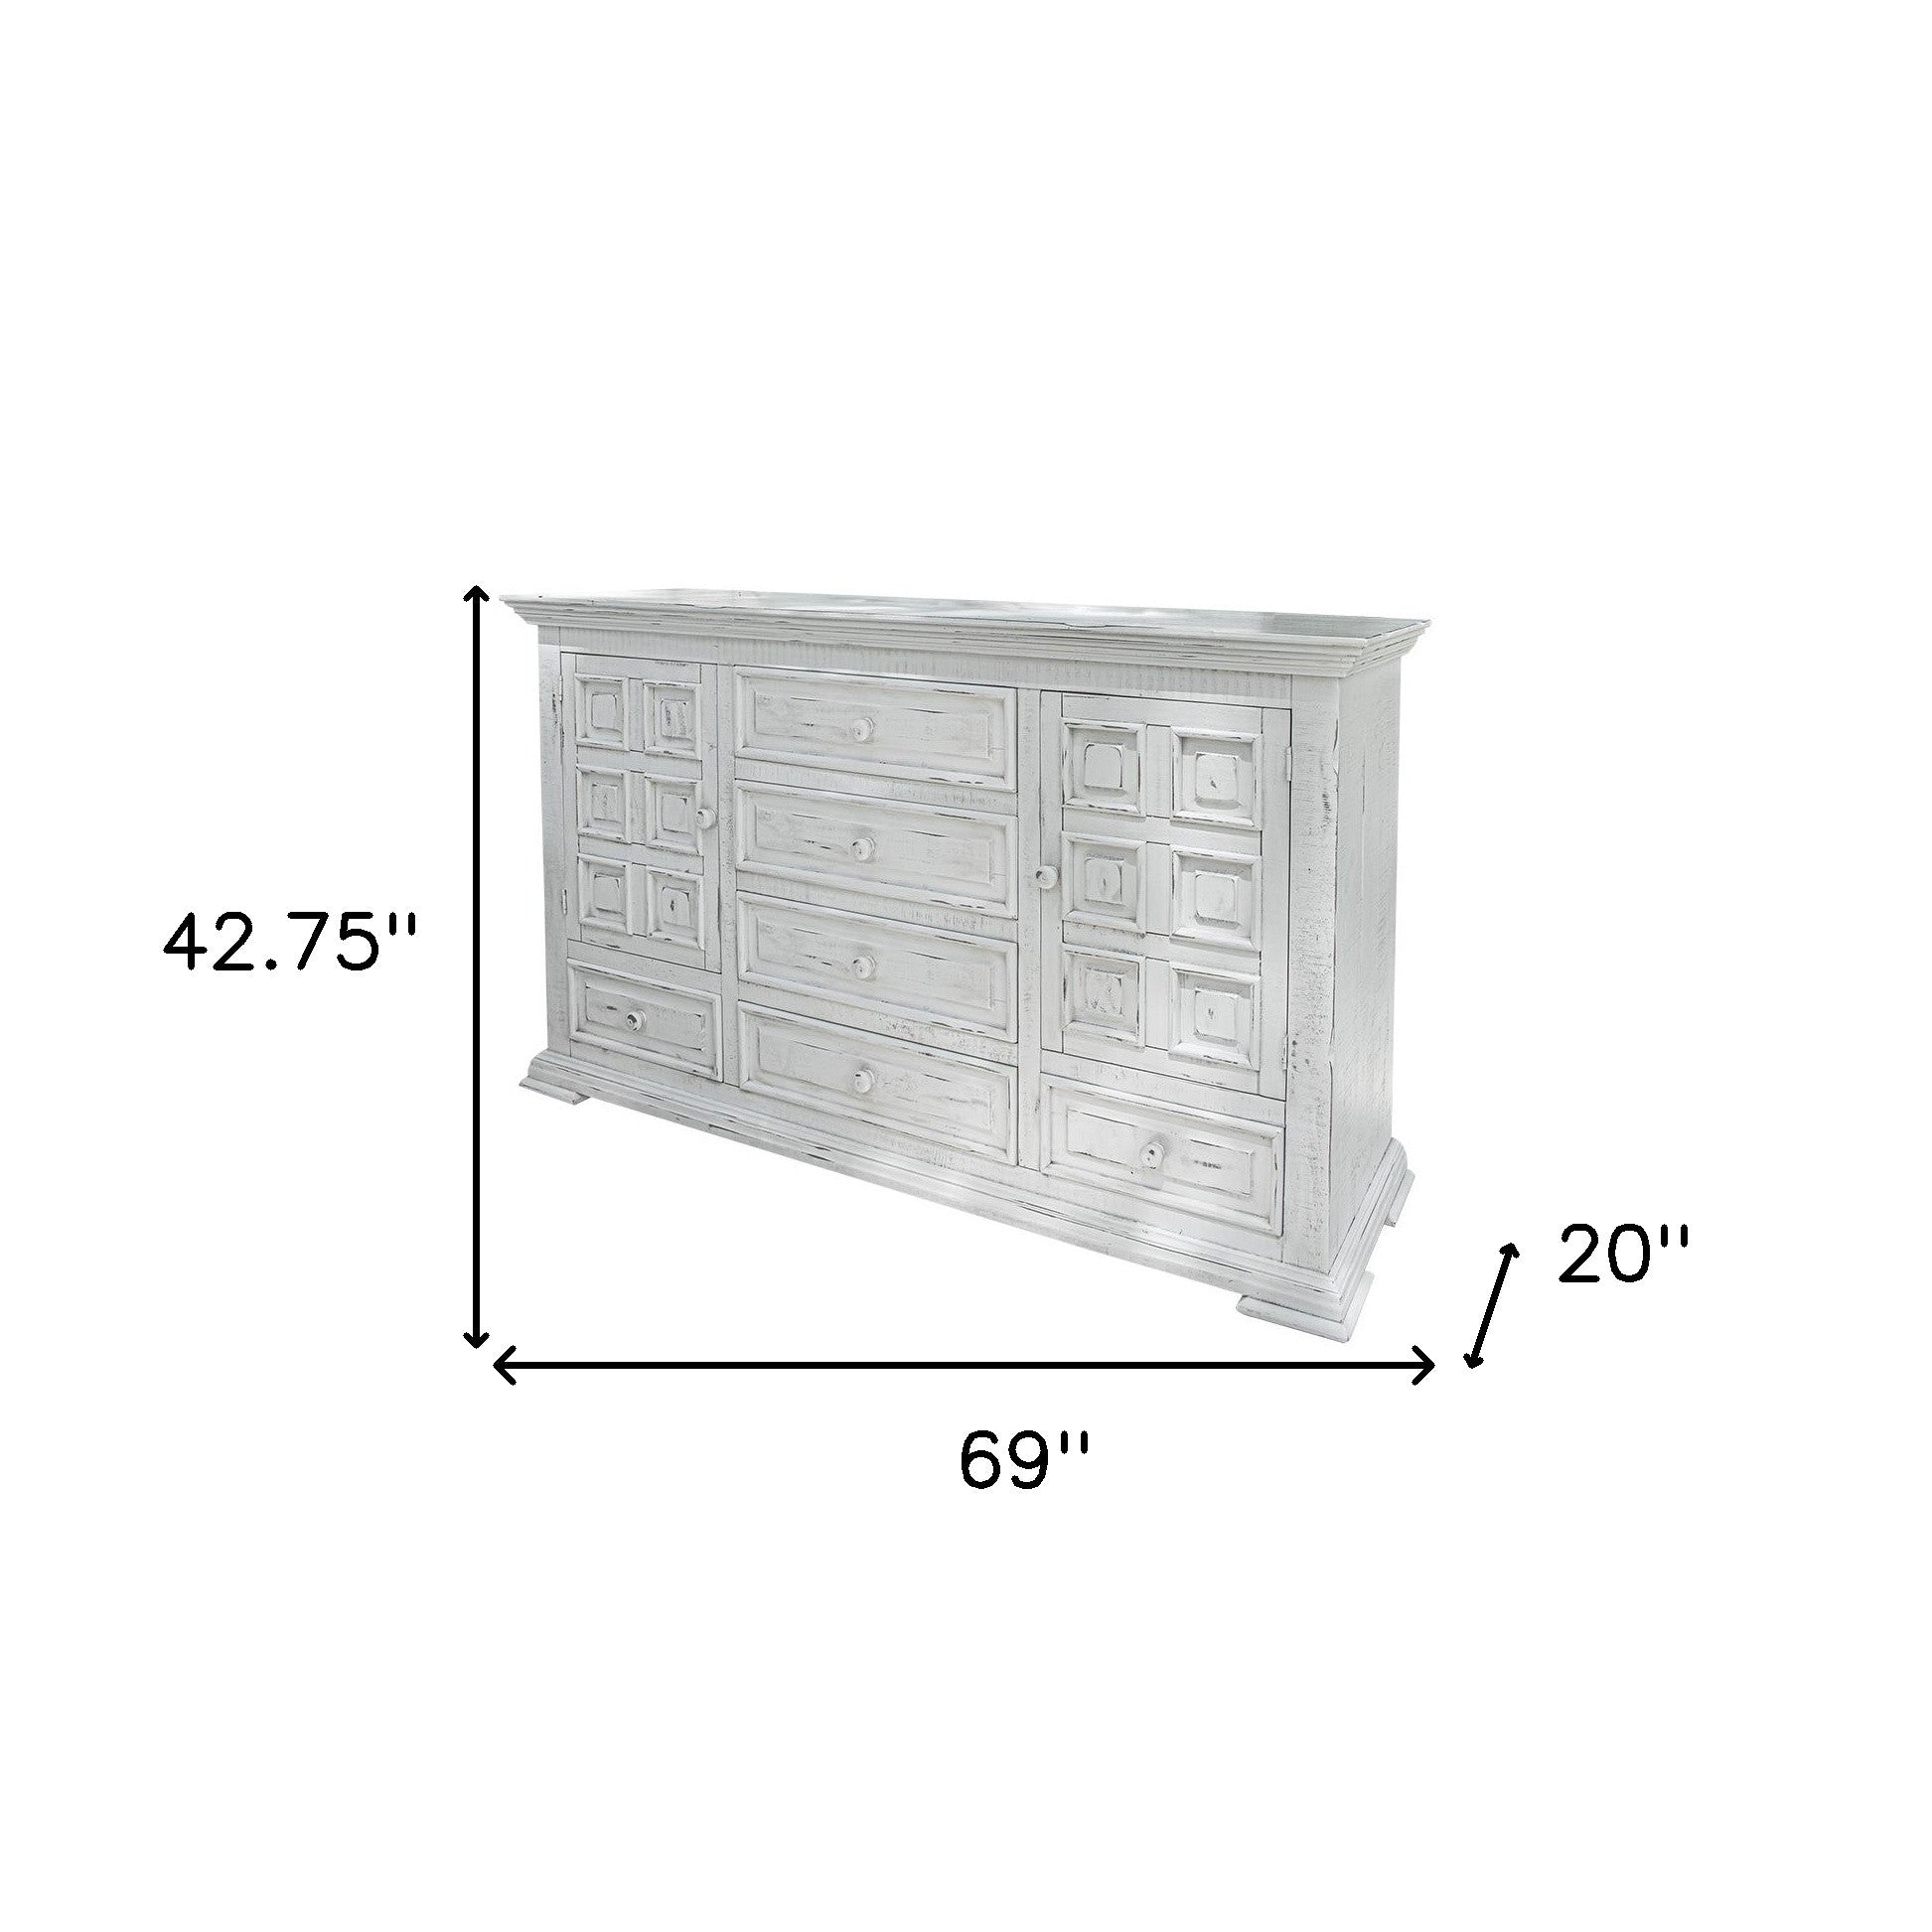 69" White Solid Wood Six Drawer Triple Dresser